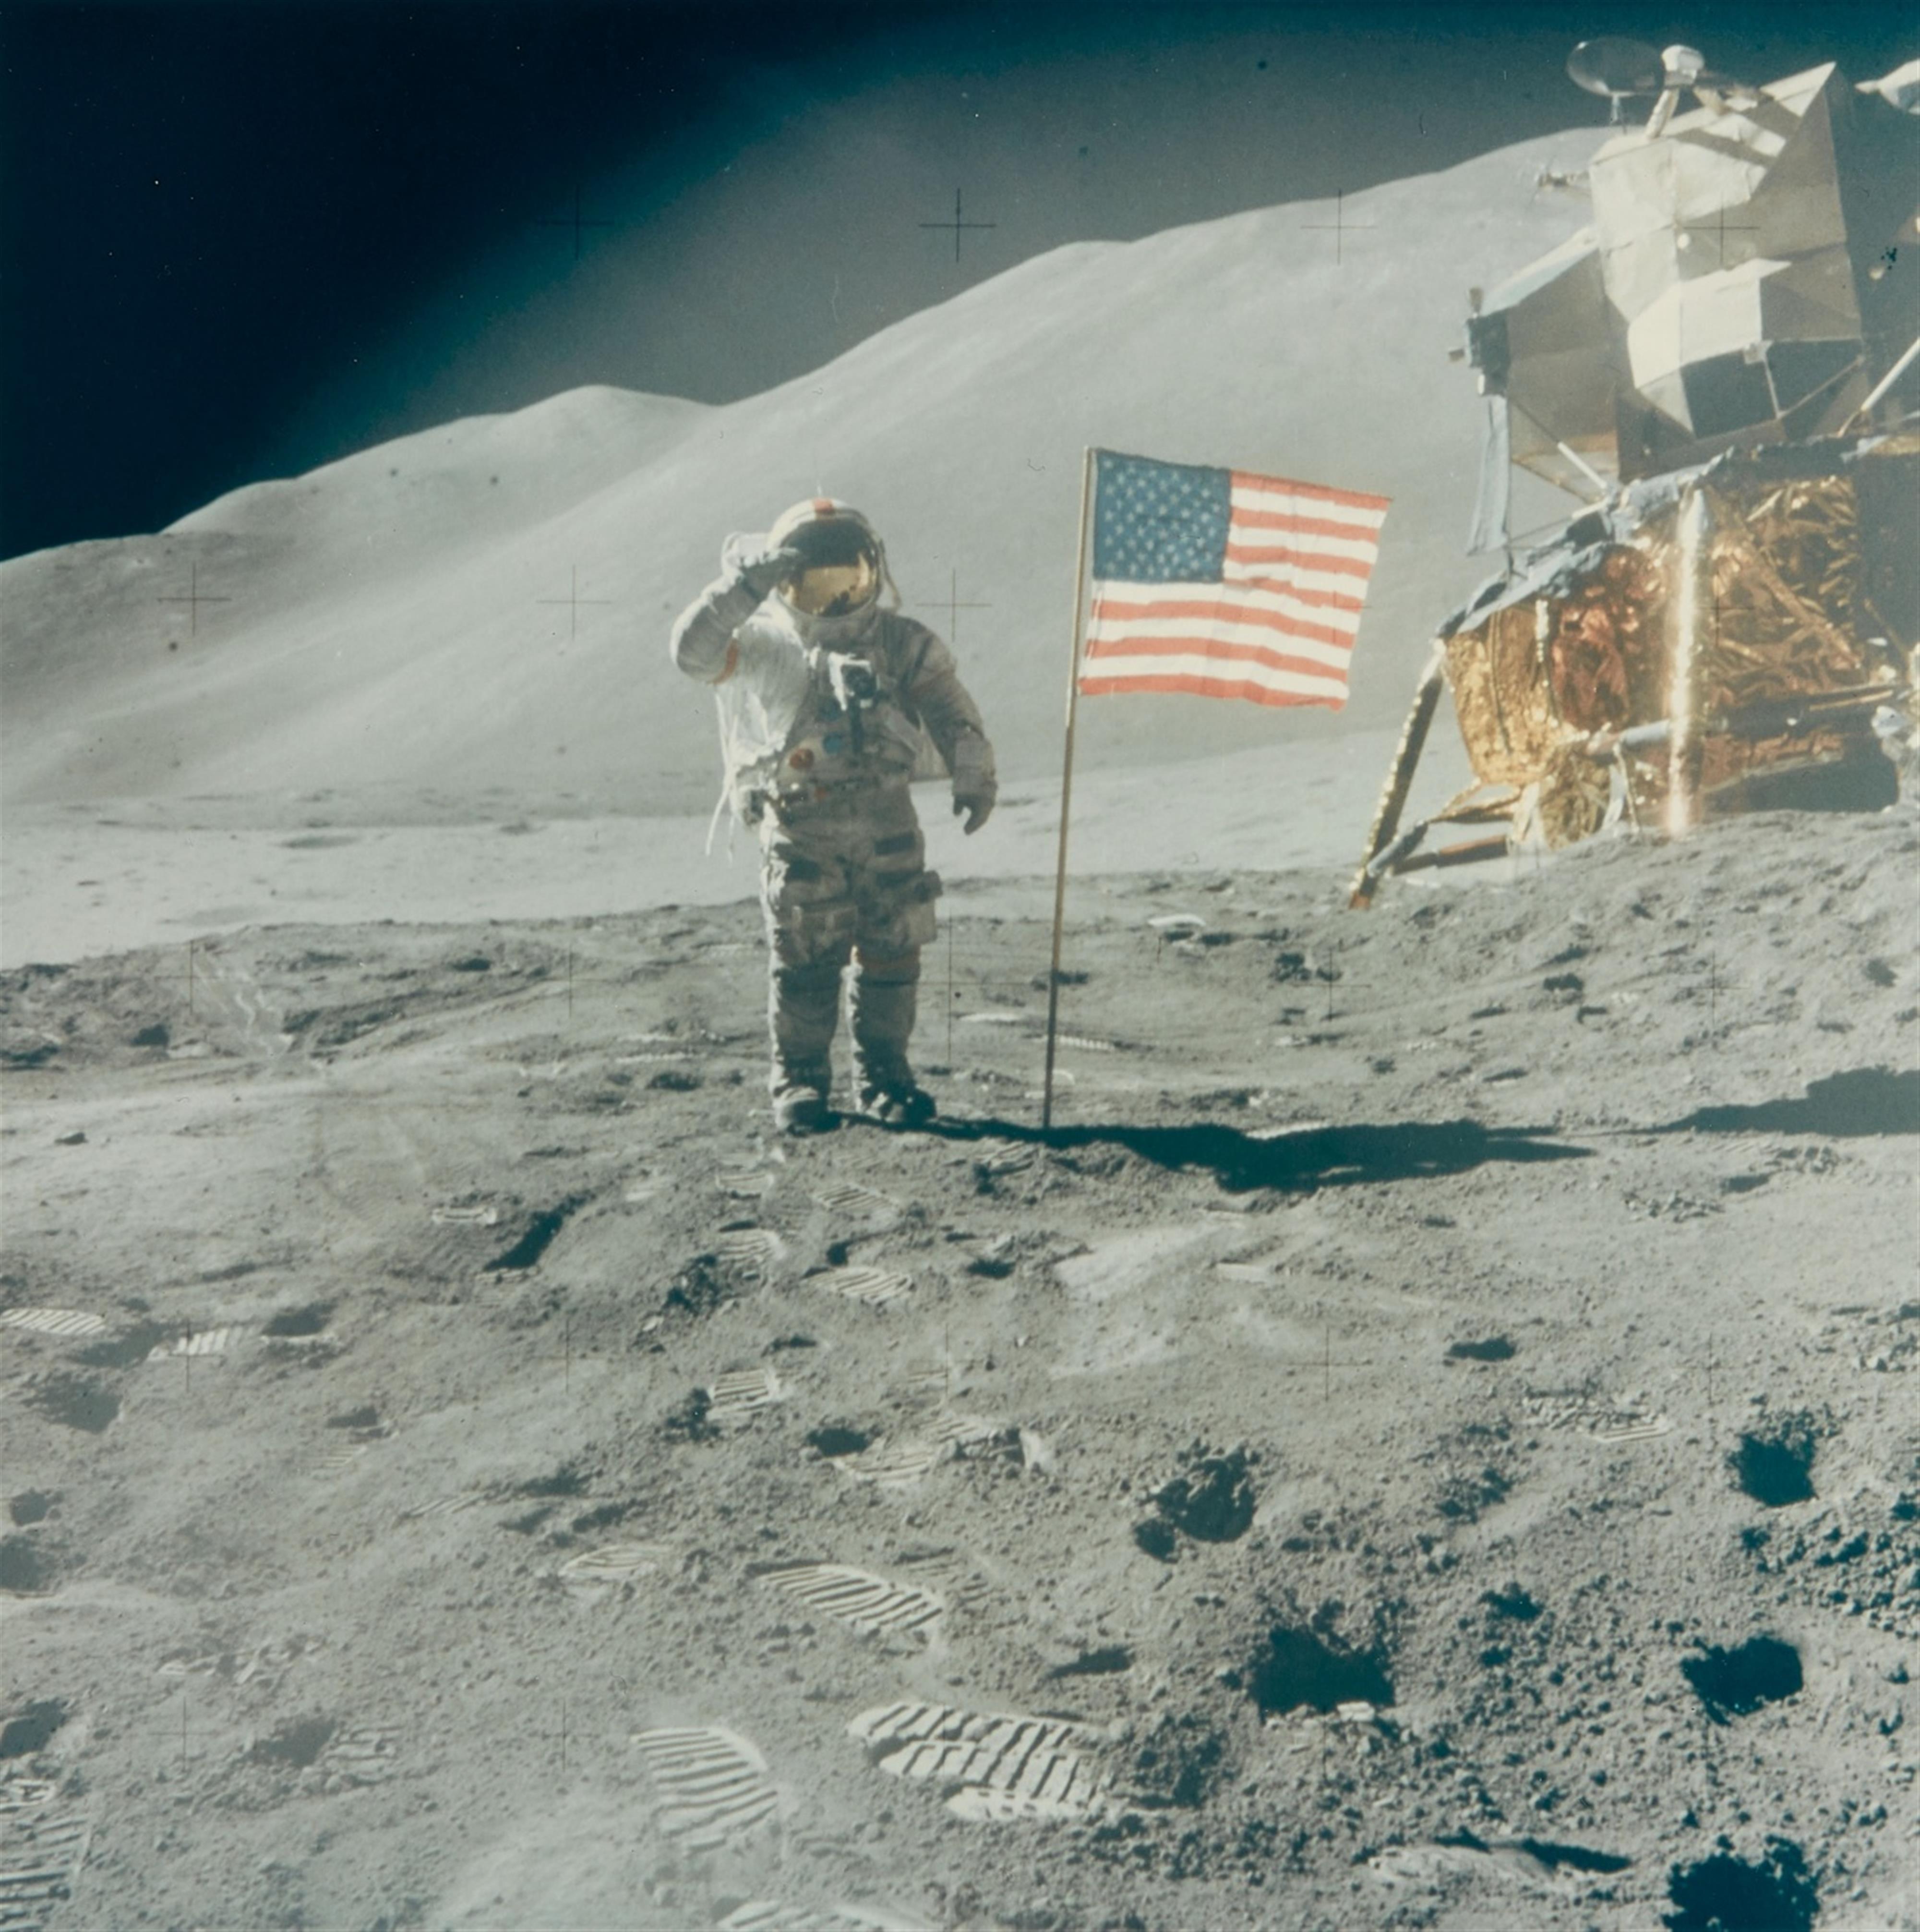 NASA - Astronaut David Scott gives salute beside U.S. Flag during EVA - image-1